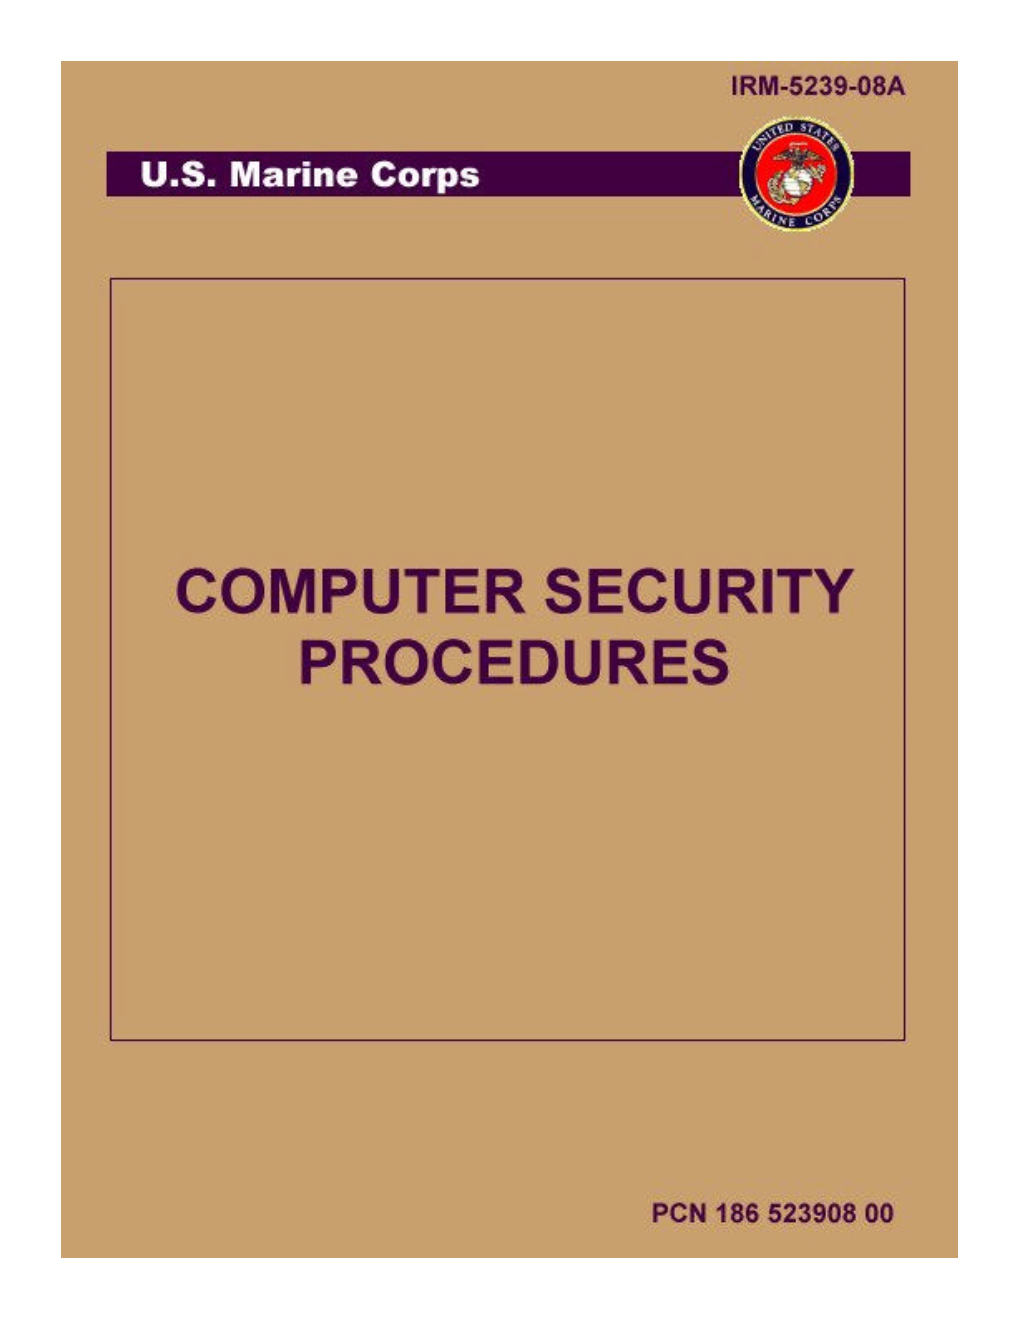 IRM 5239-08A Computer Security Procedures.Pdf